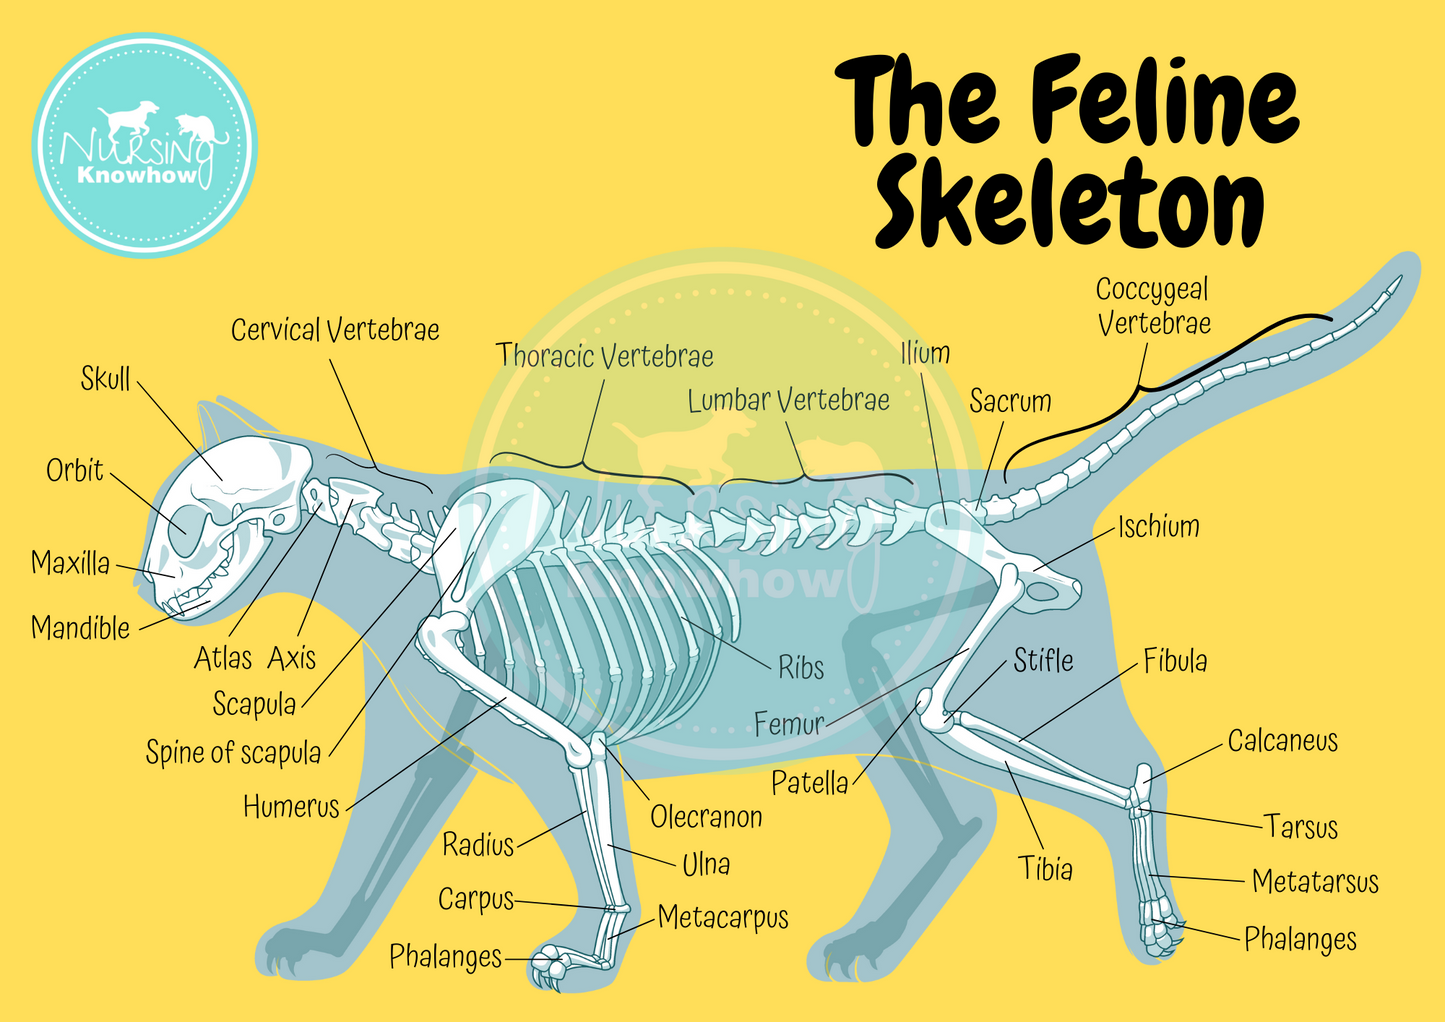 The Feline Skeleton (Digital Download) - Nursing Knowhow